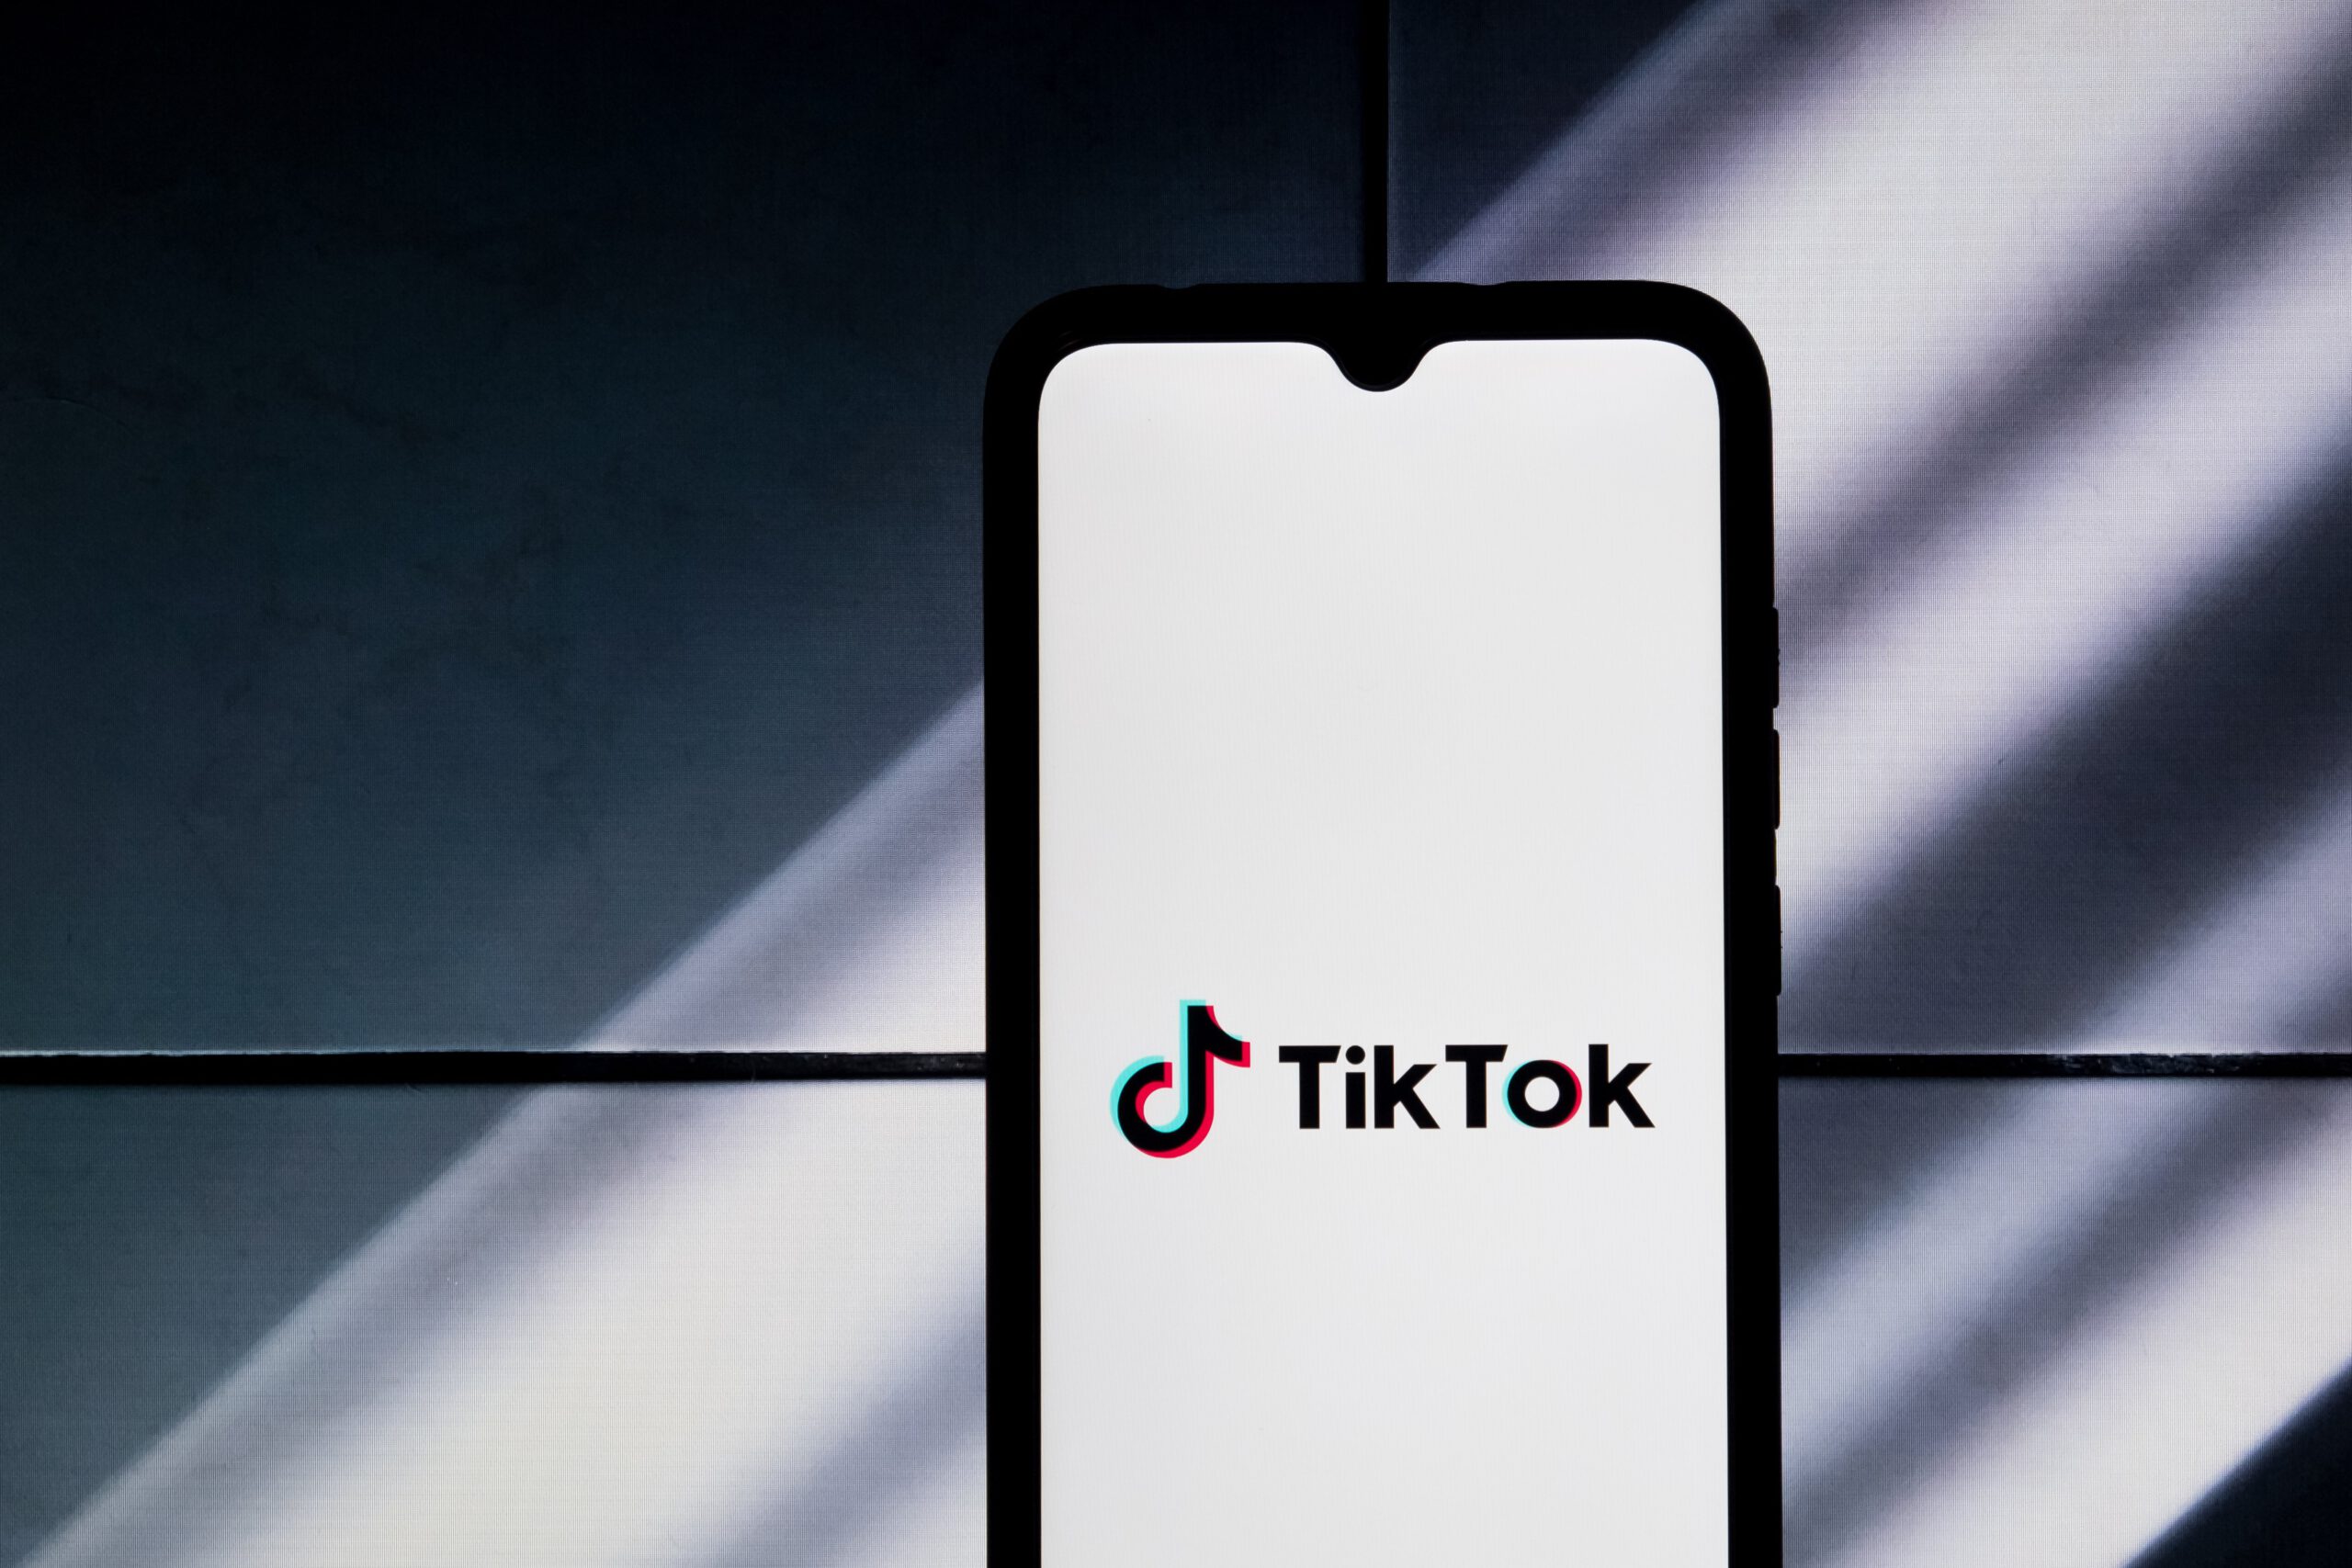 Phone displaying the TikTok logo.